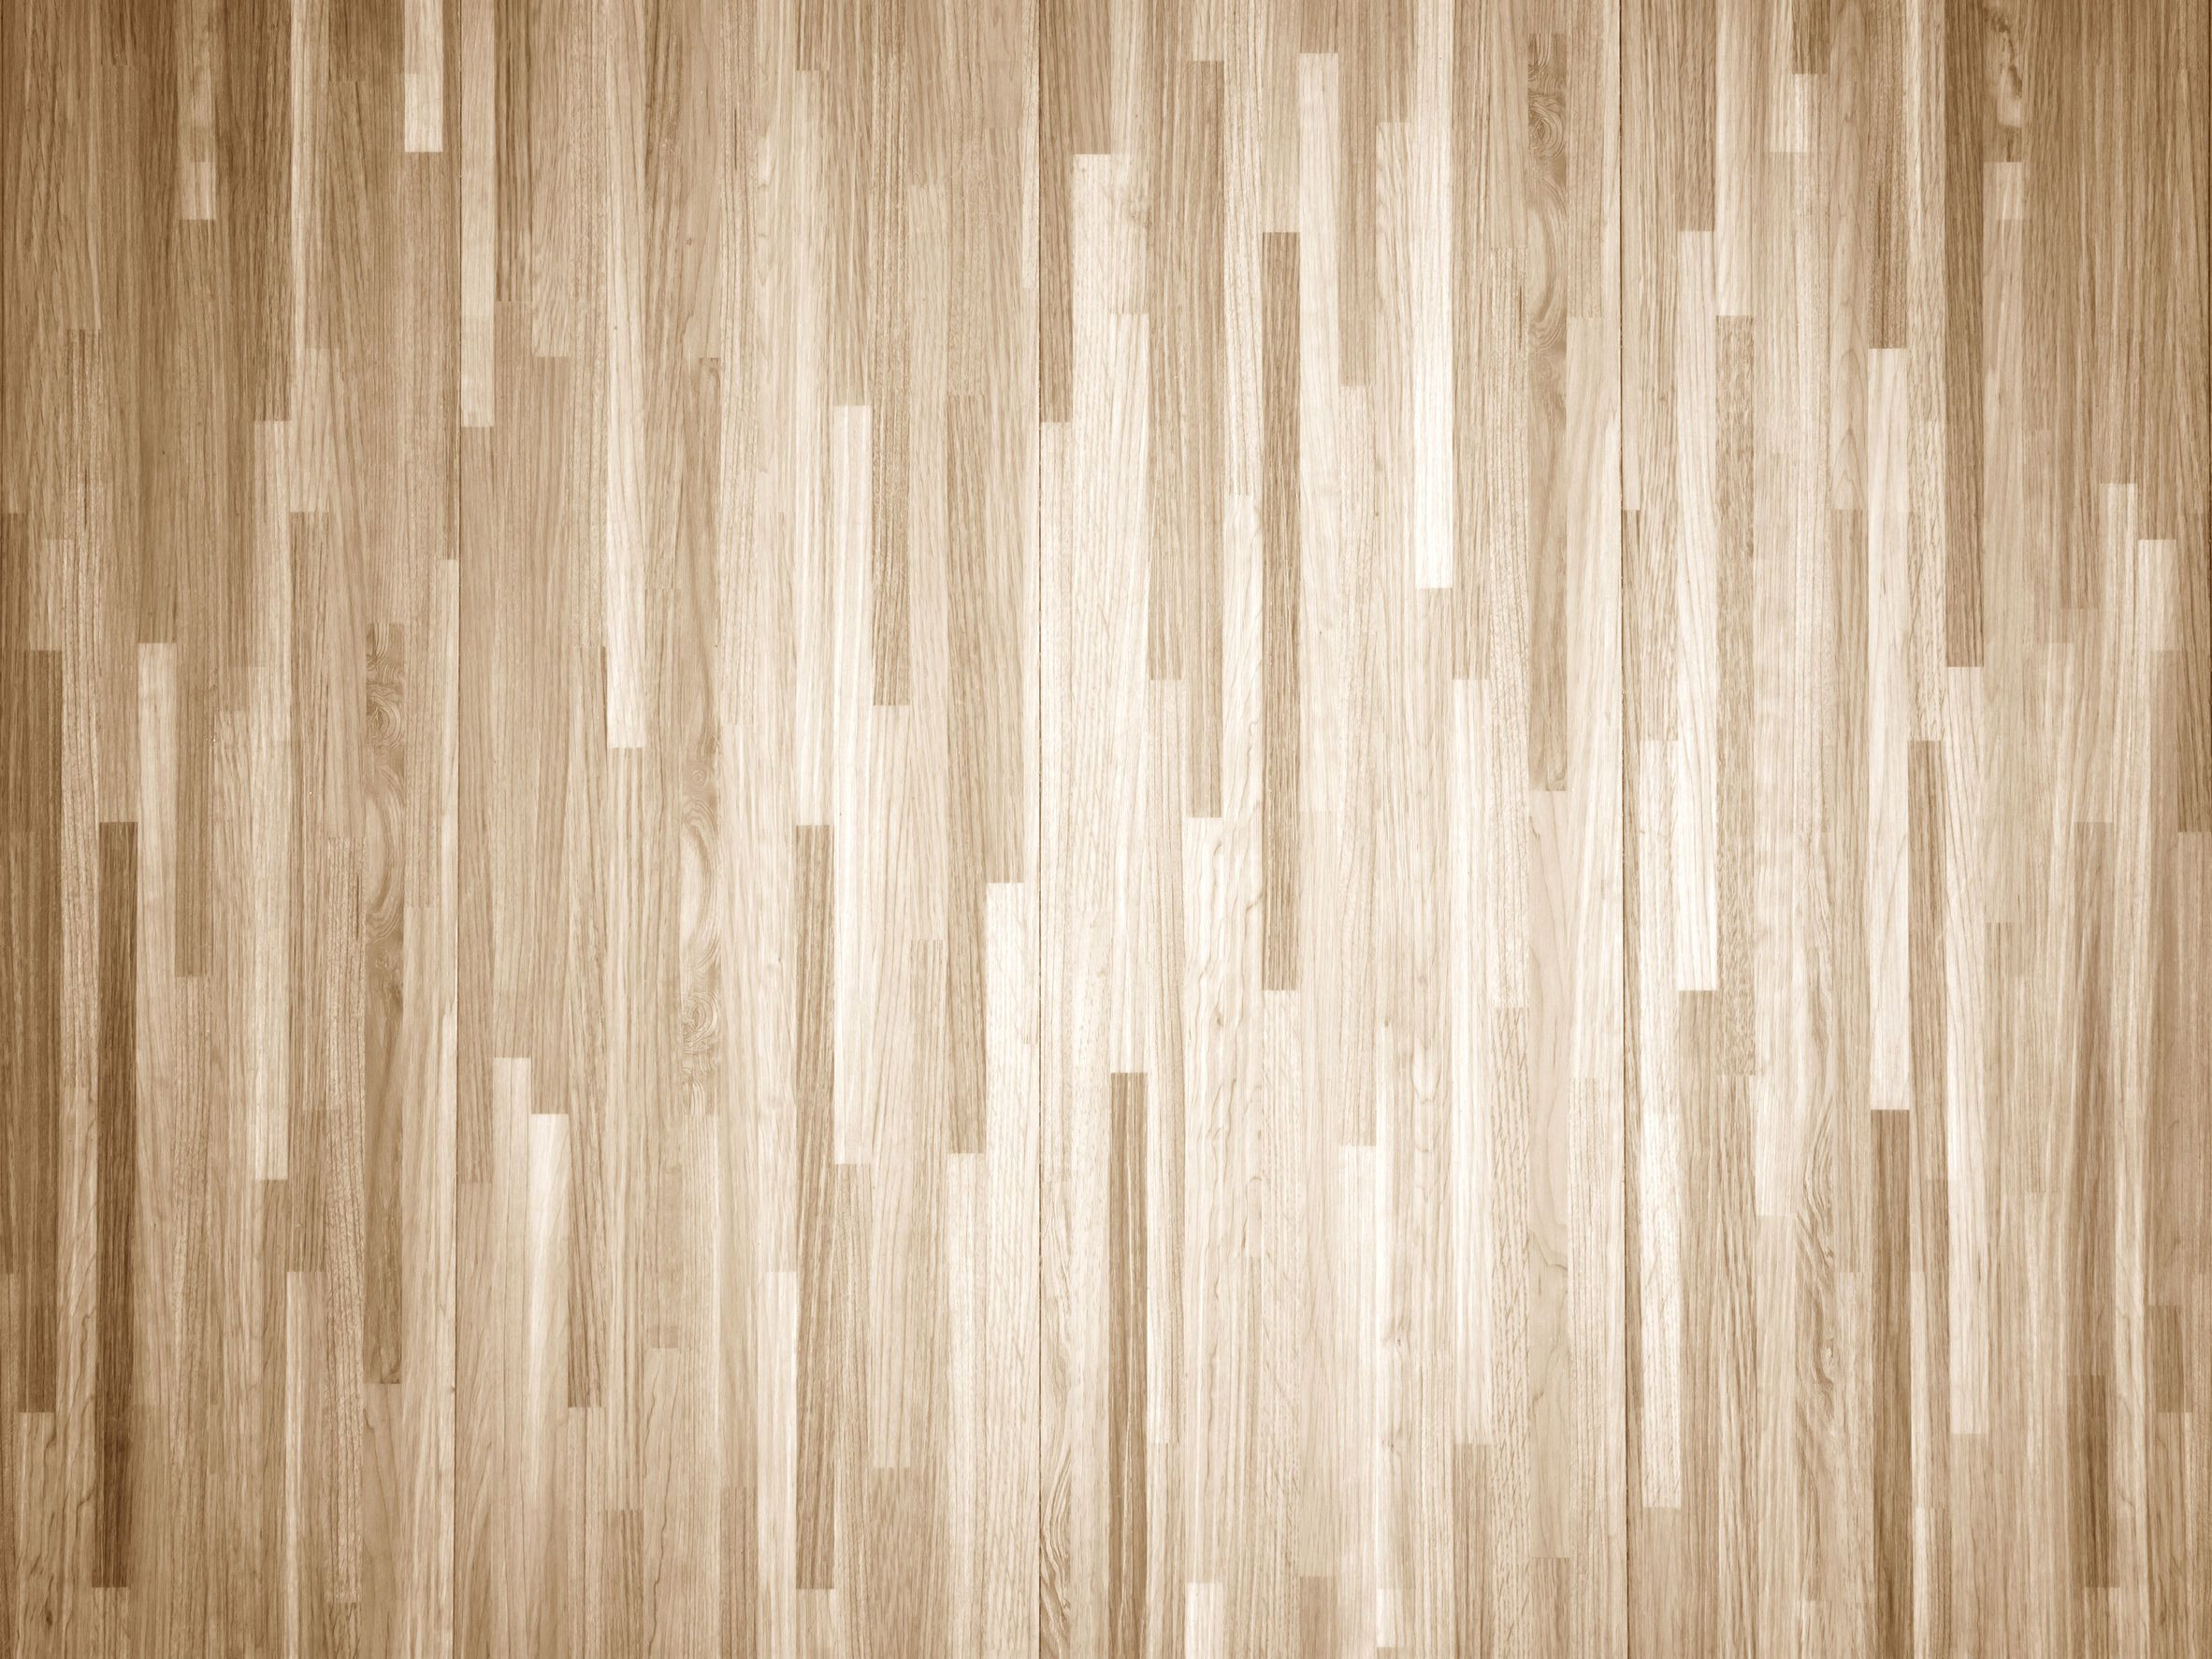 25 Stylish tools Needed to Install Hardwood Flooring 2024 free download tools needed to install hardwood flooring of how to chemically strip wood floors woodfloordoctor com with you